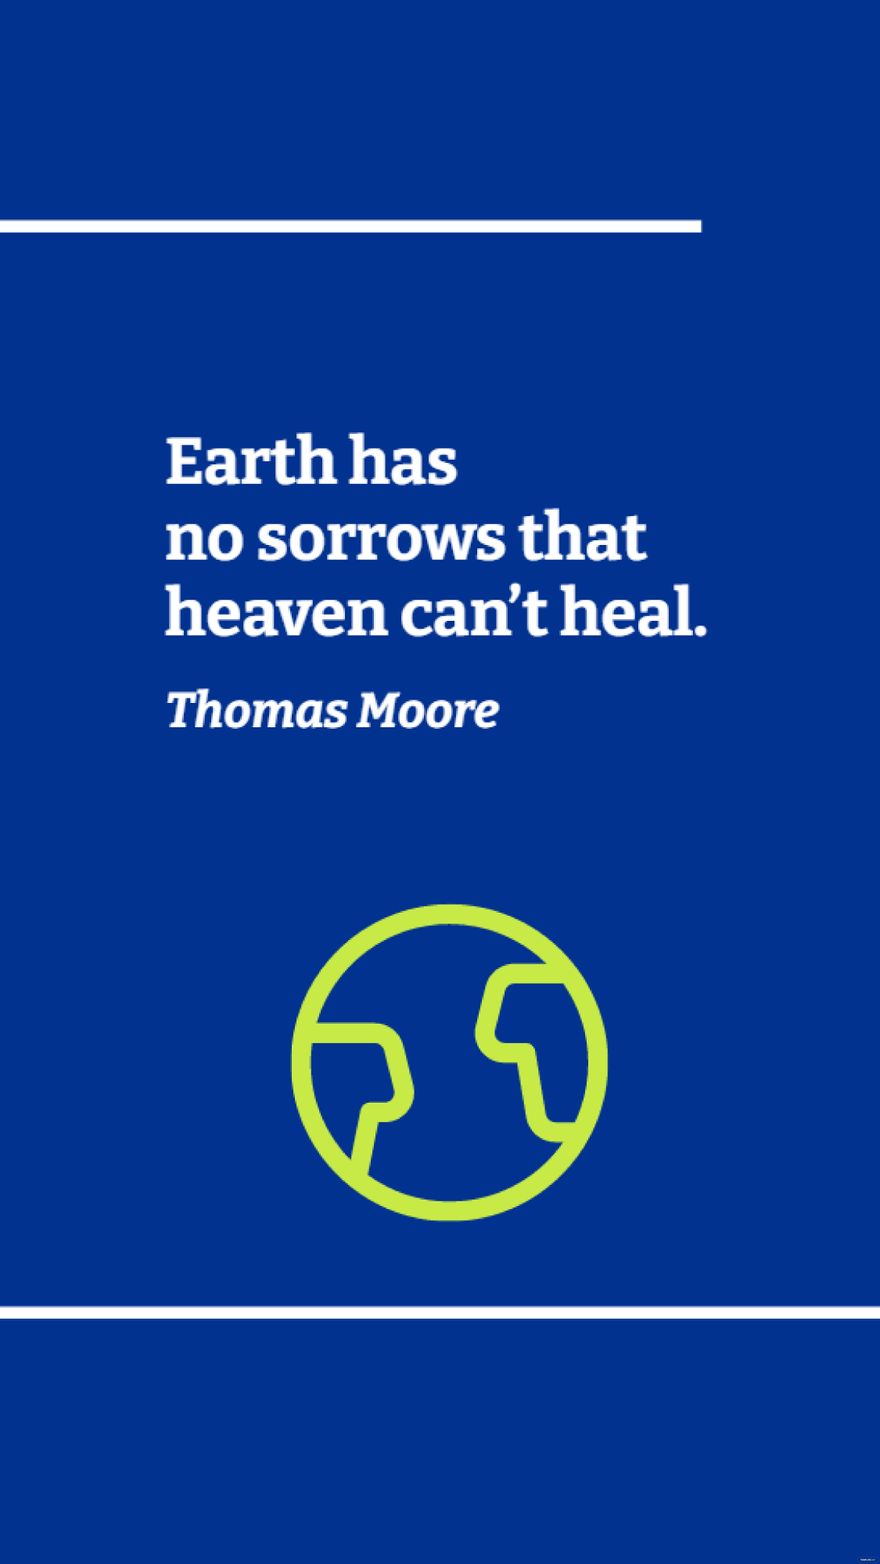 Thomas Moore - Earth has no sorrows that heaven can’t heal.